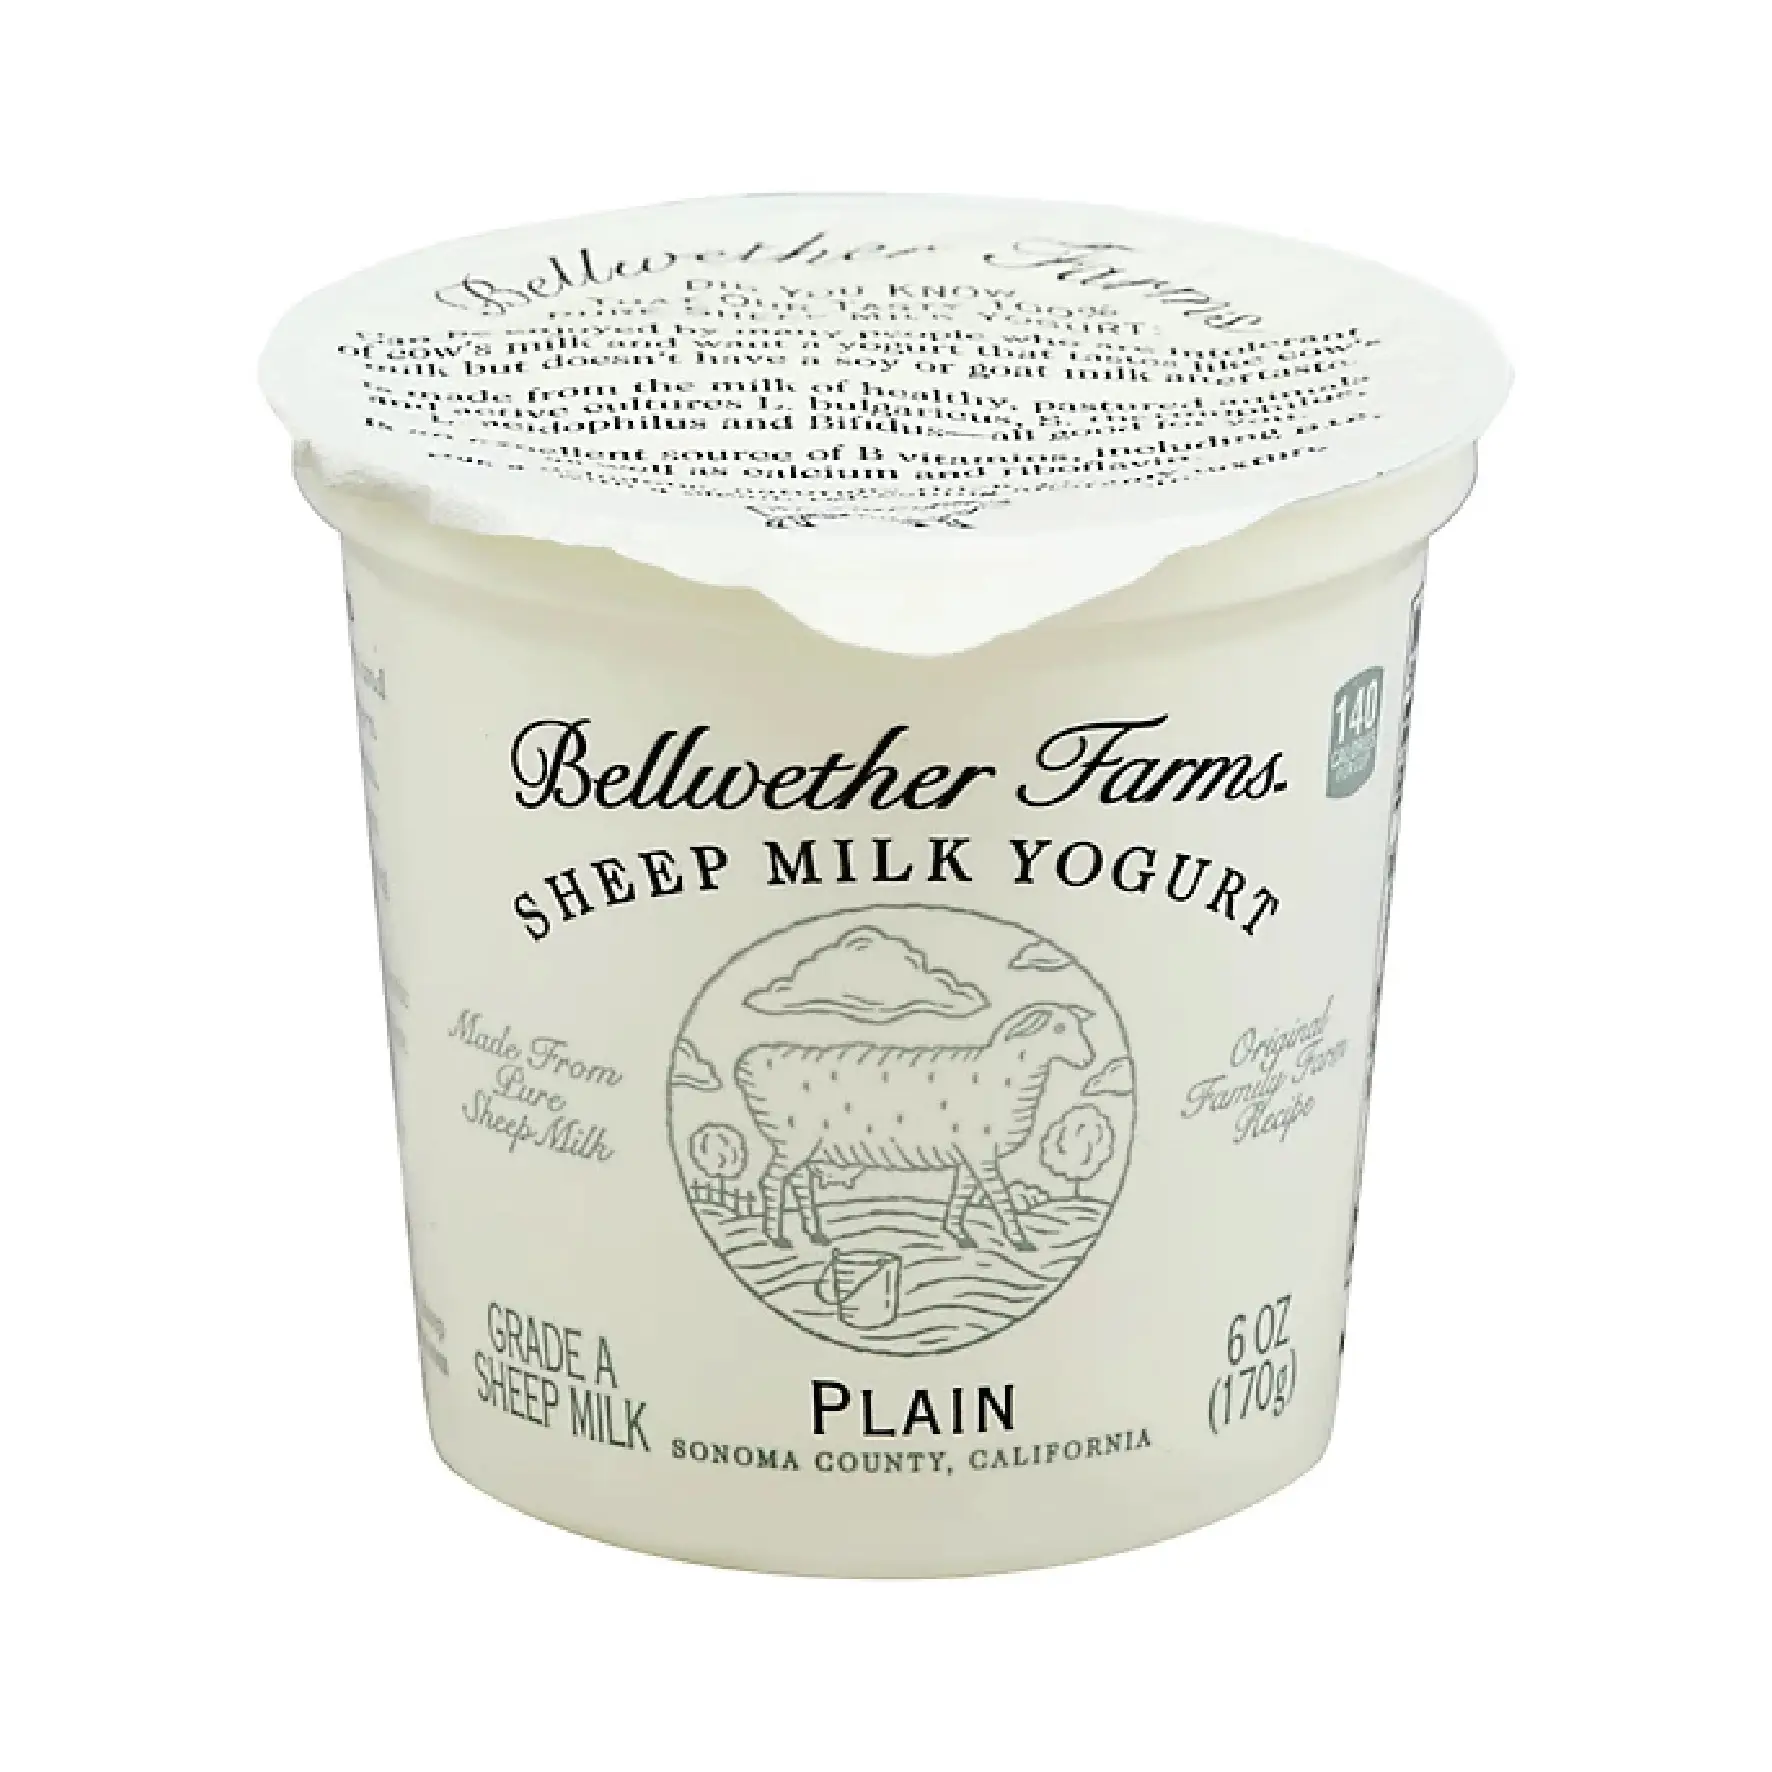 Plain Sheep's Milk Yogurt Delivery